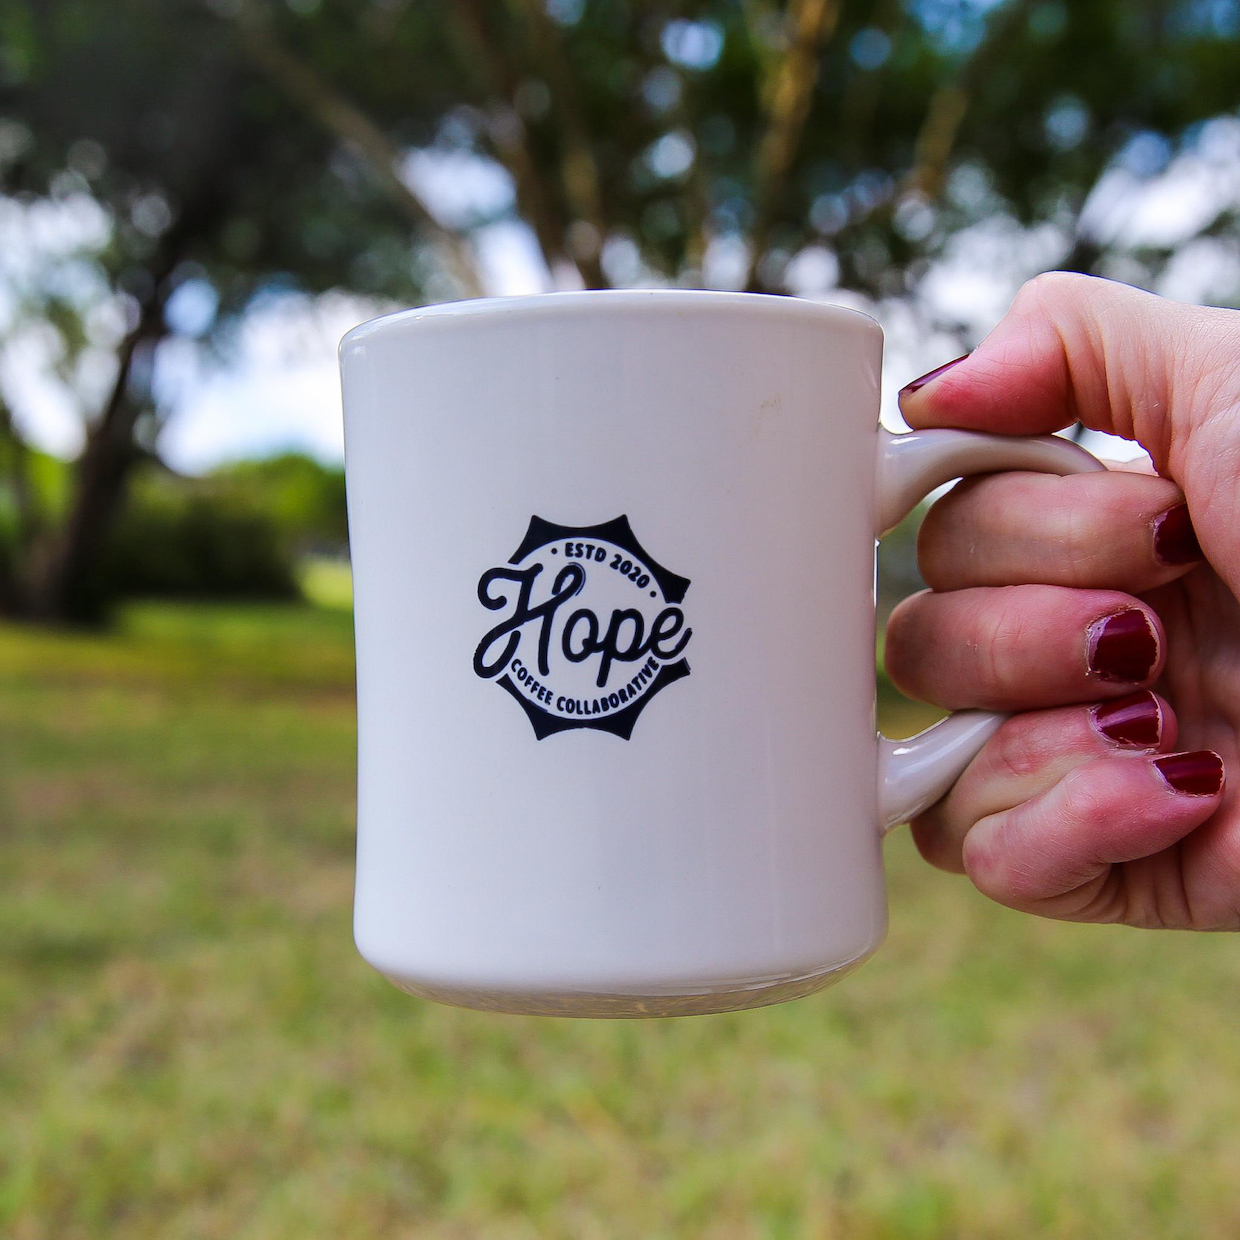 Hope Coffee Collaborative mug